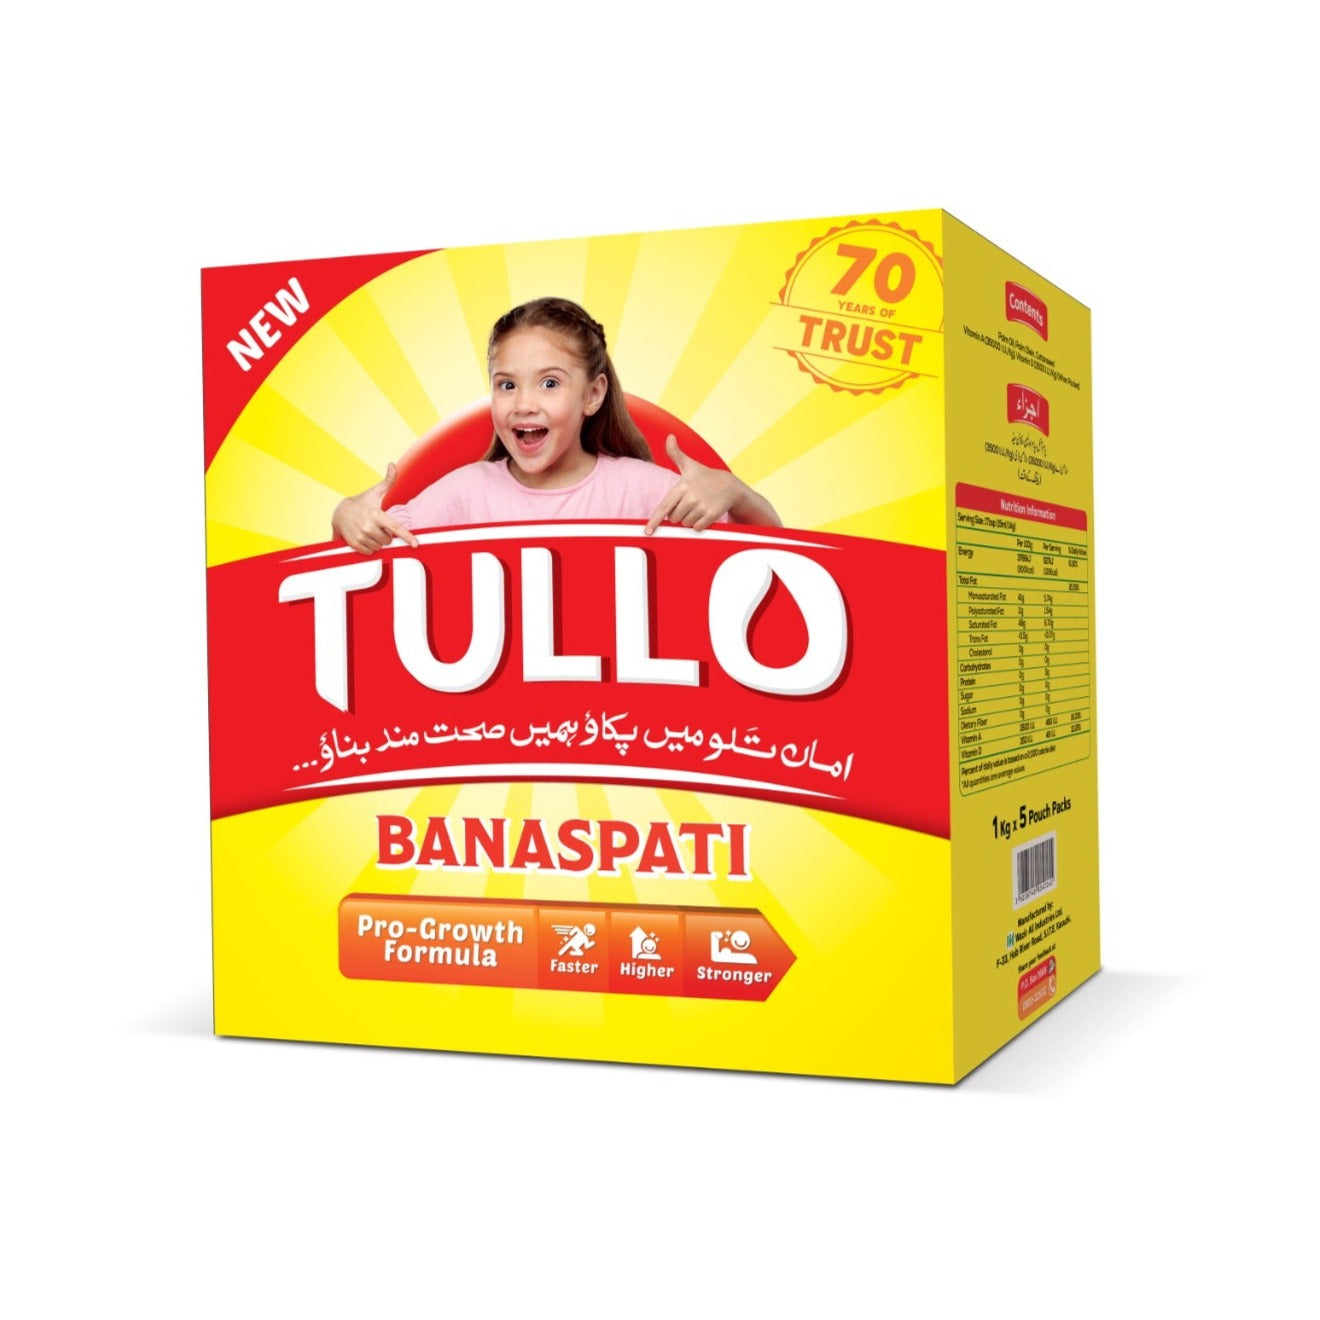 Tullo - Banaspati Ghee - 5 Liters - Pack